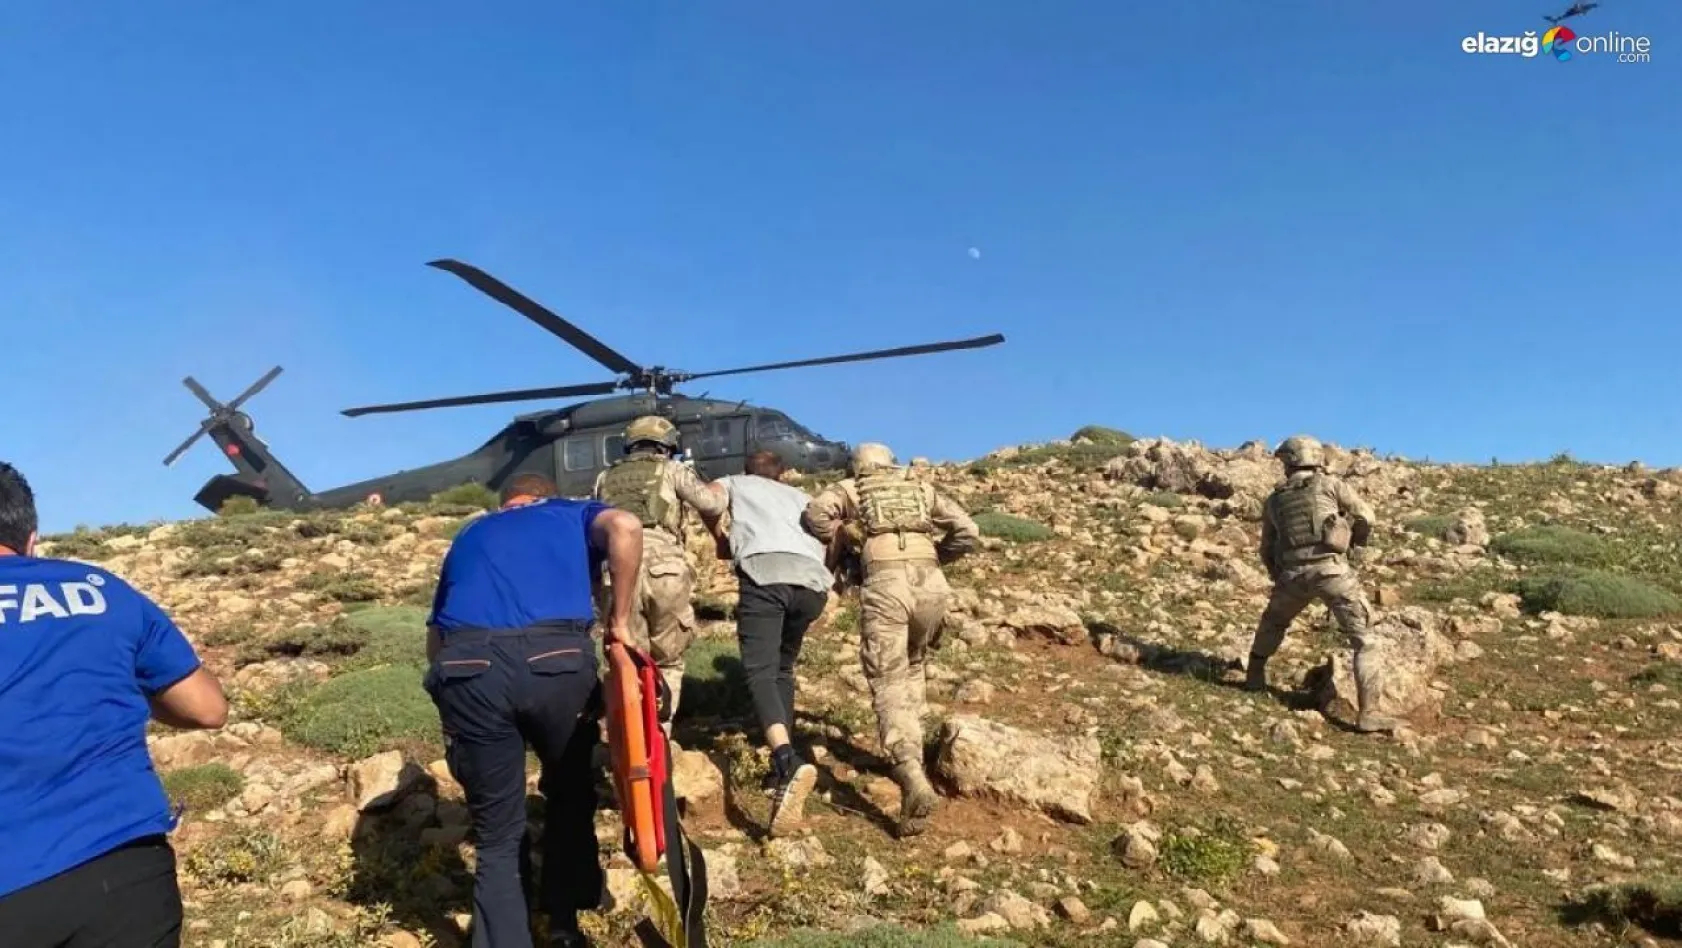 Tunceli'de rahatsızlanan vatandaş, helikopterle Elazığ'a sevk edildi